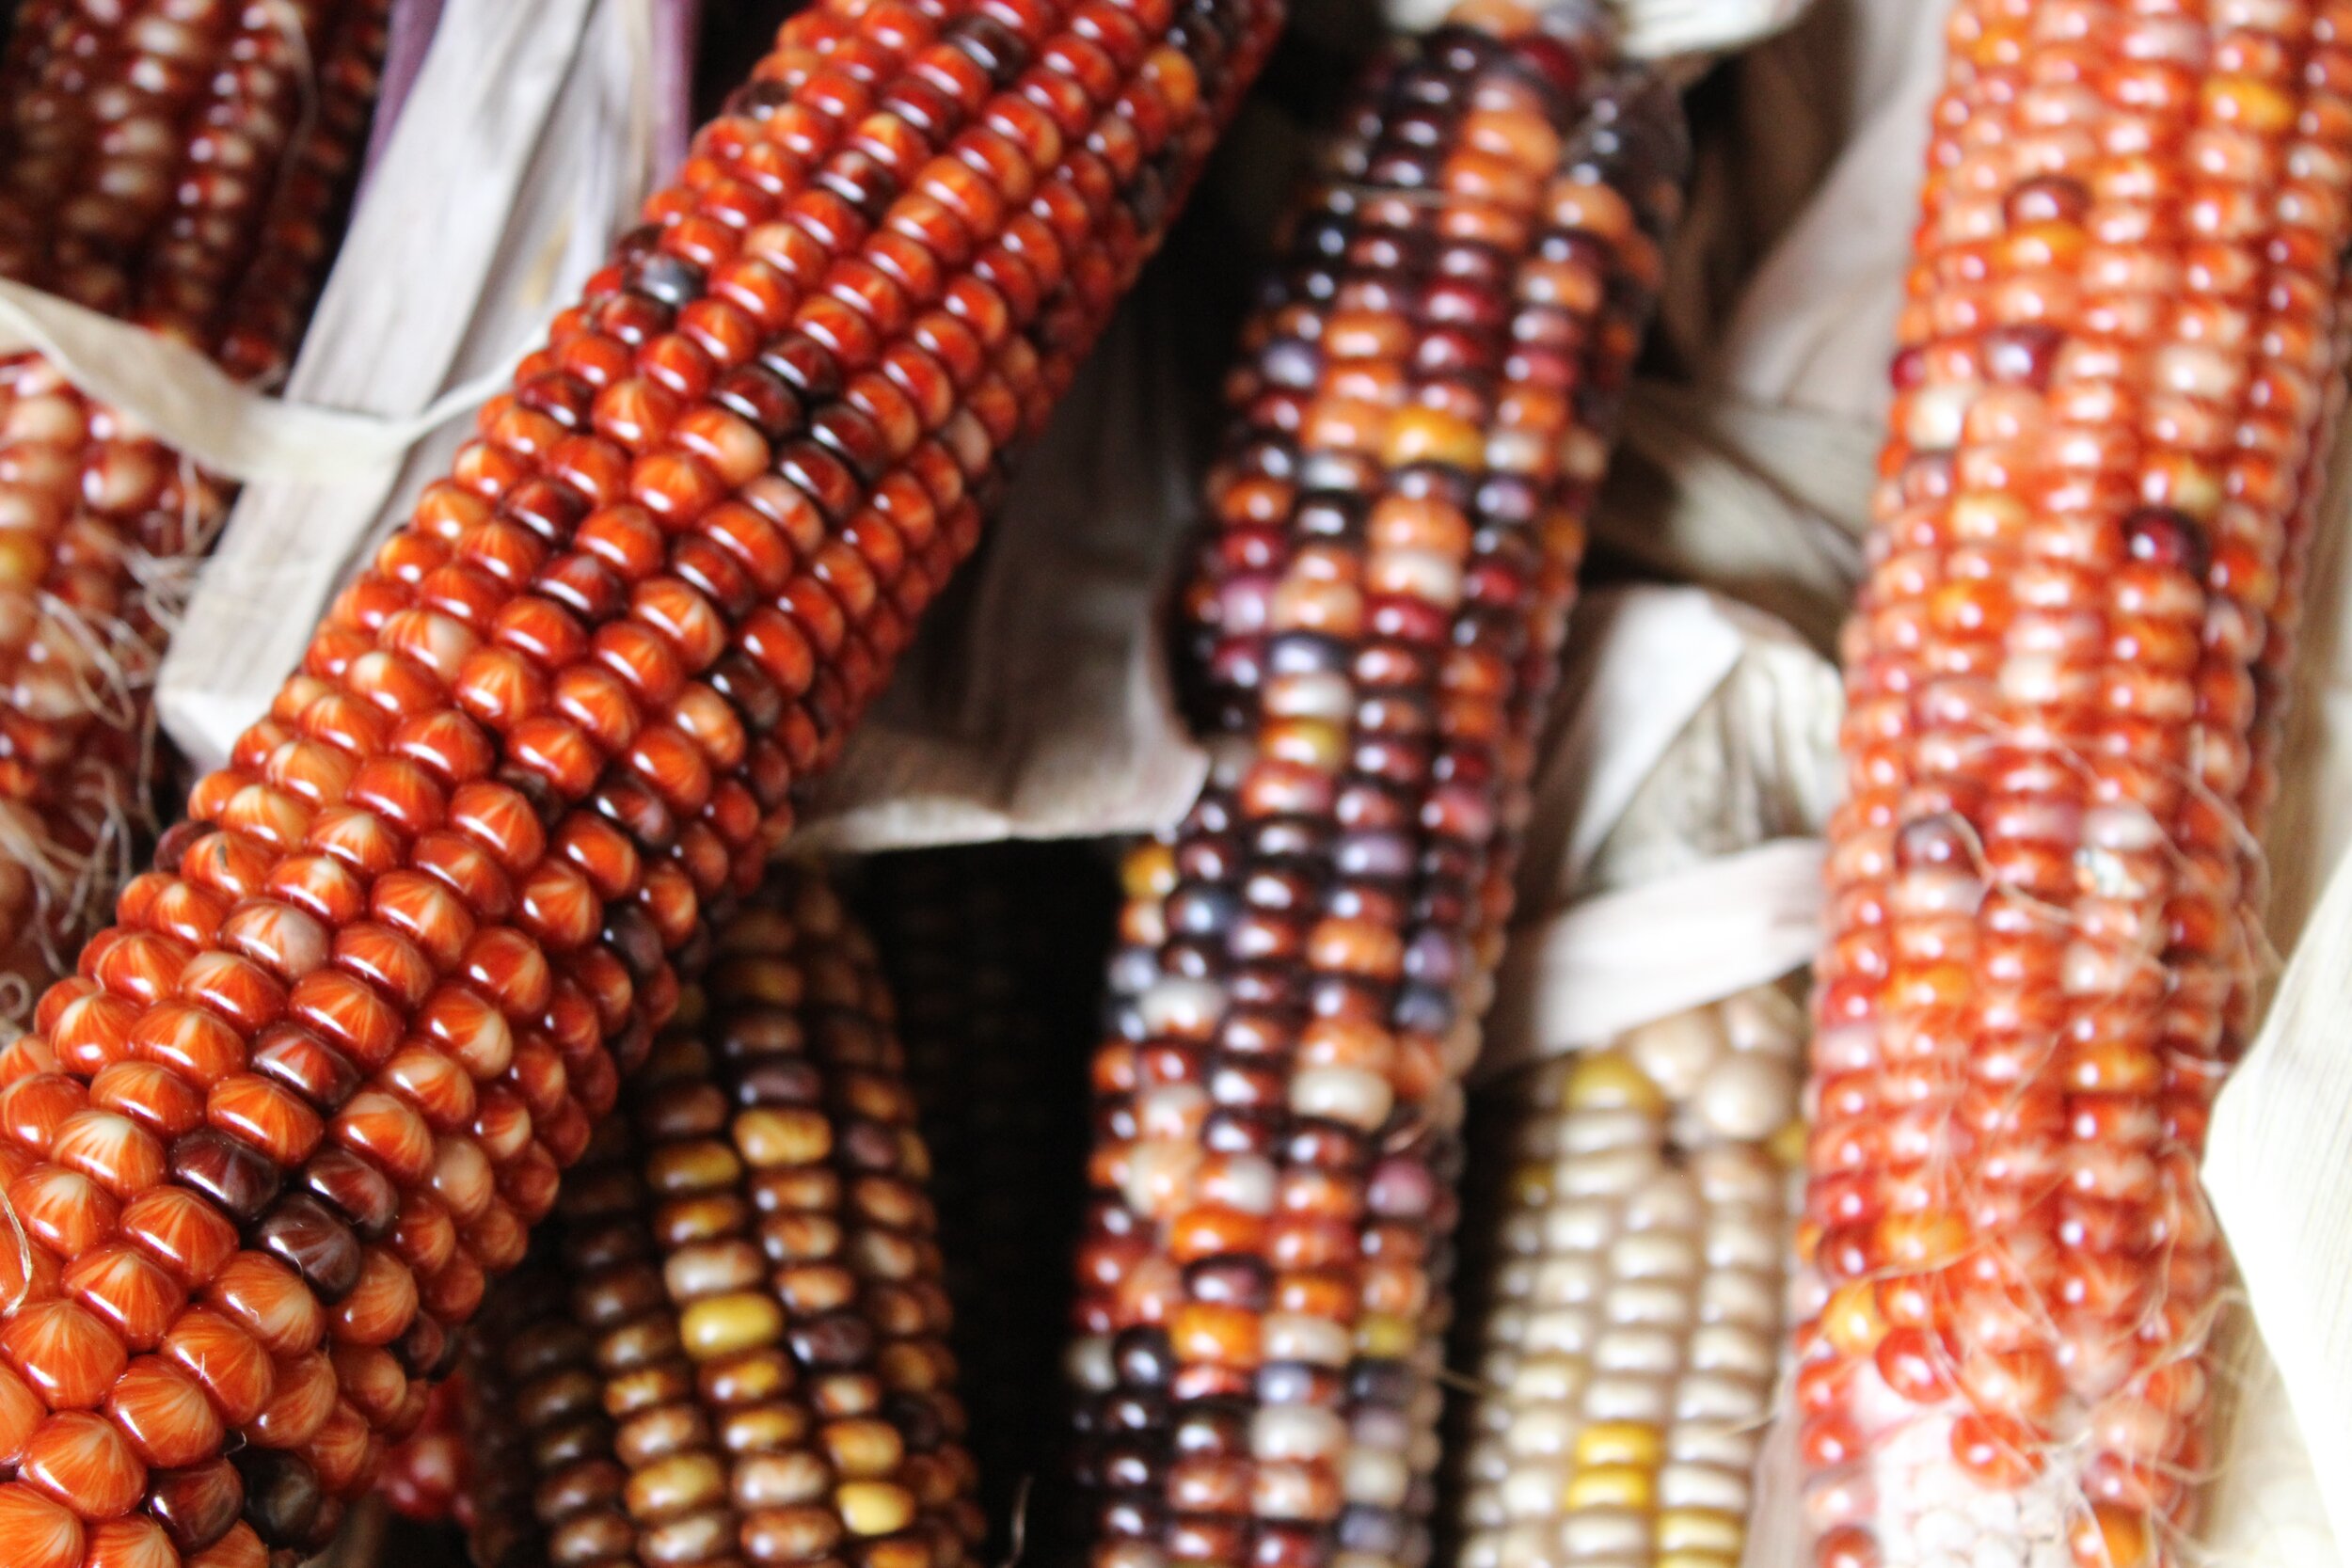 Native American corn